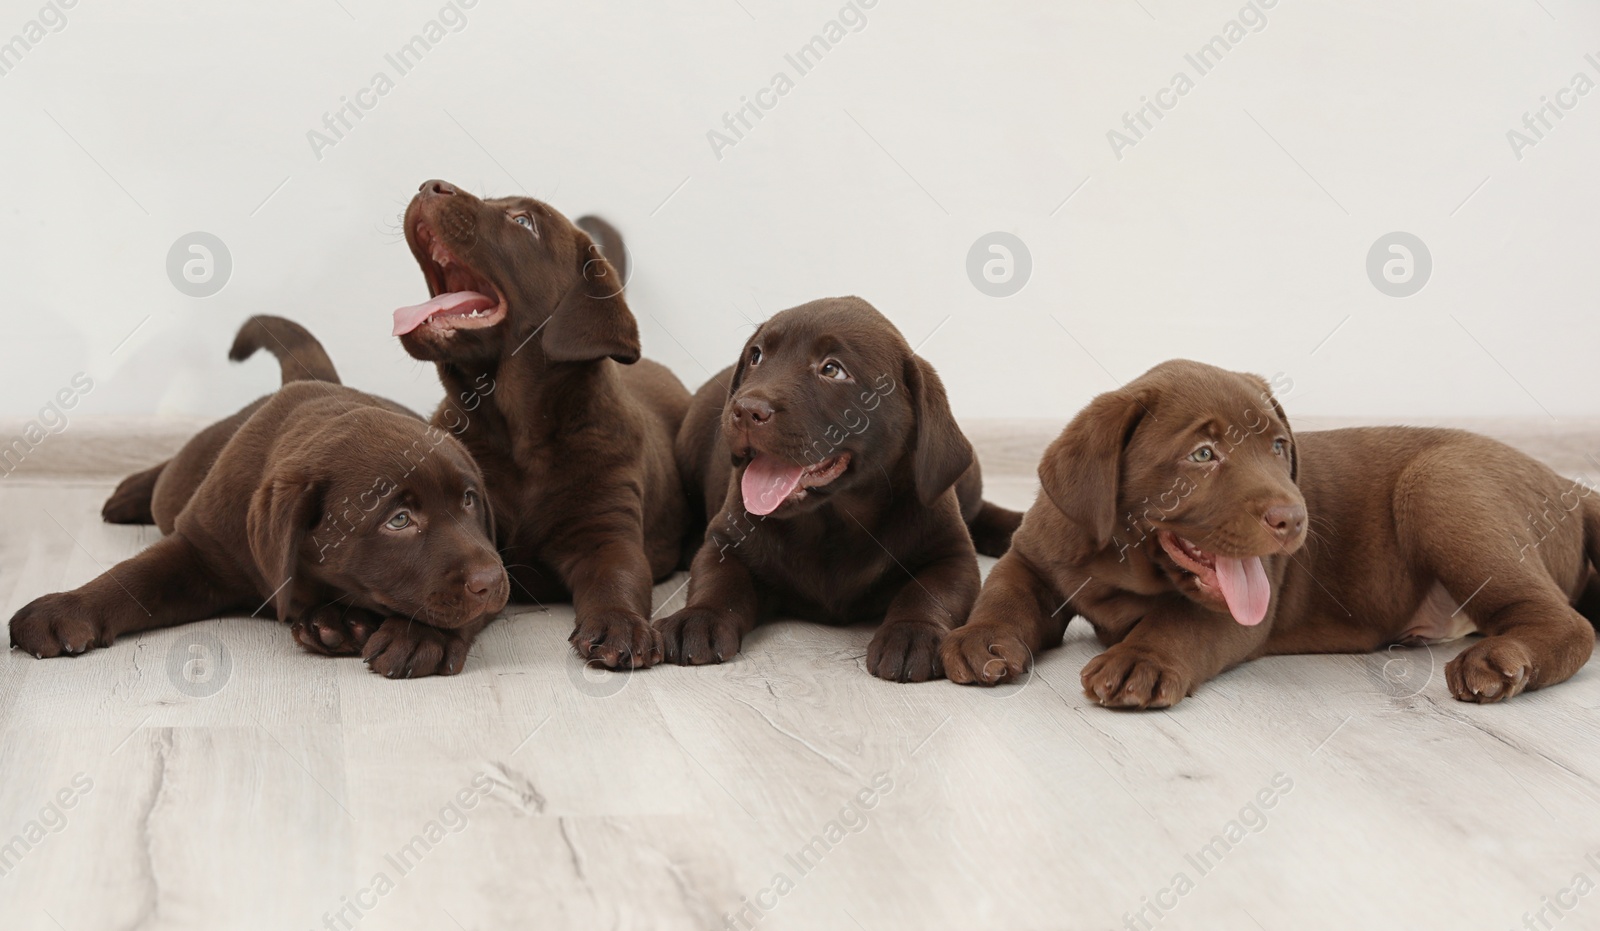 Photo of Chocolate Labrador Retriever puppies on floor indoors